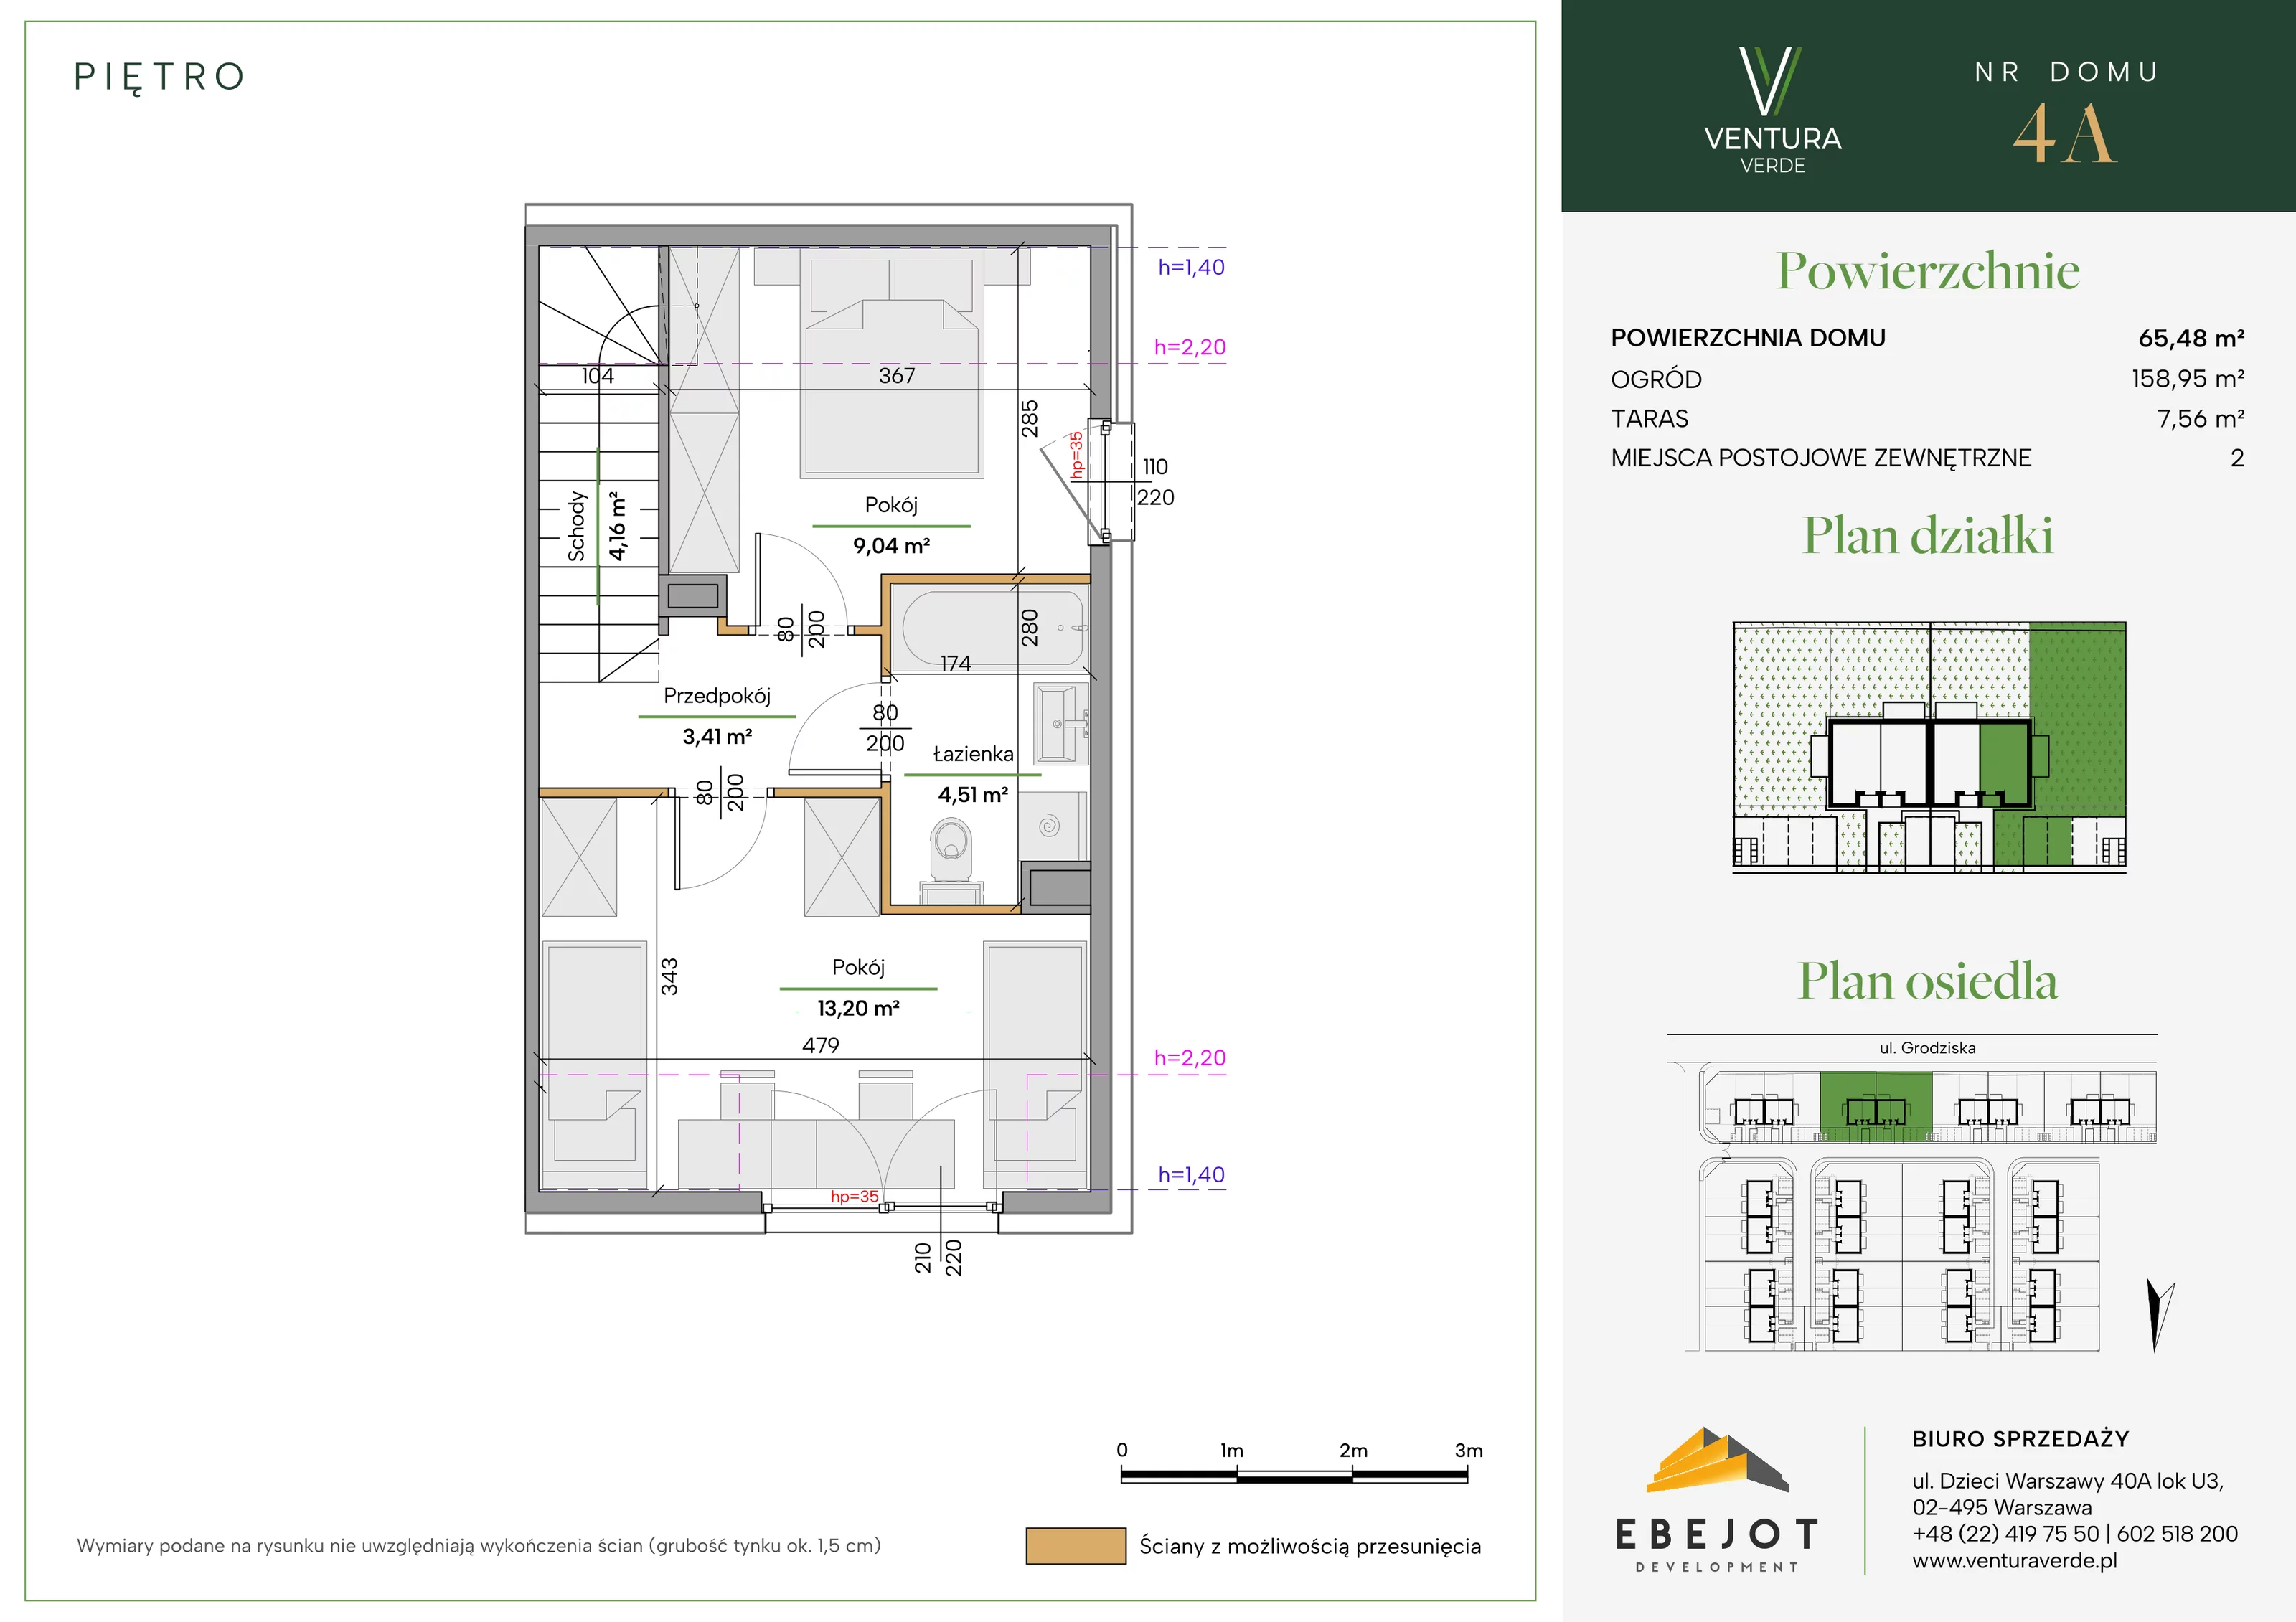 Dom 65,48 m², oferta nr 4A, Ventura Verde II, Stara Wieś, ul. Grodziska